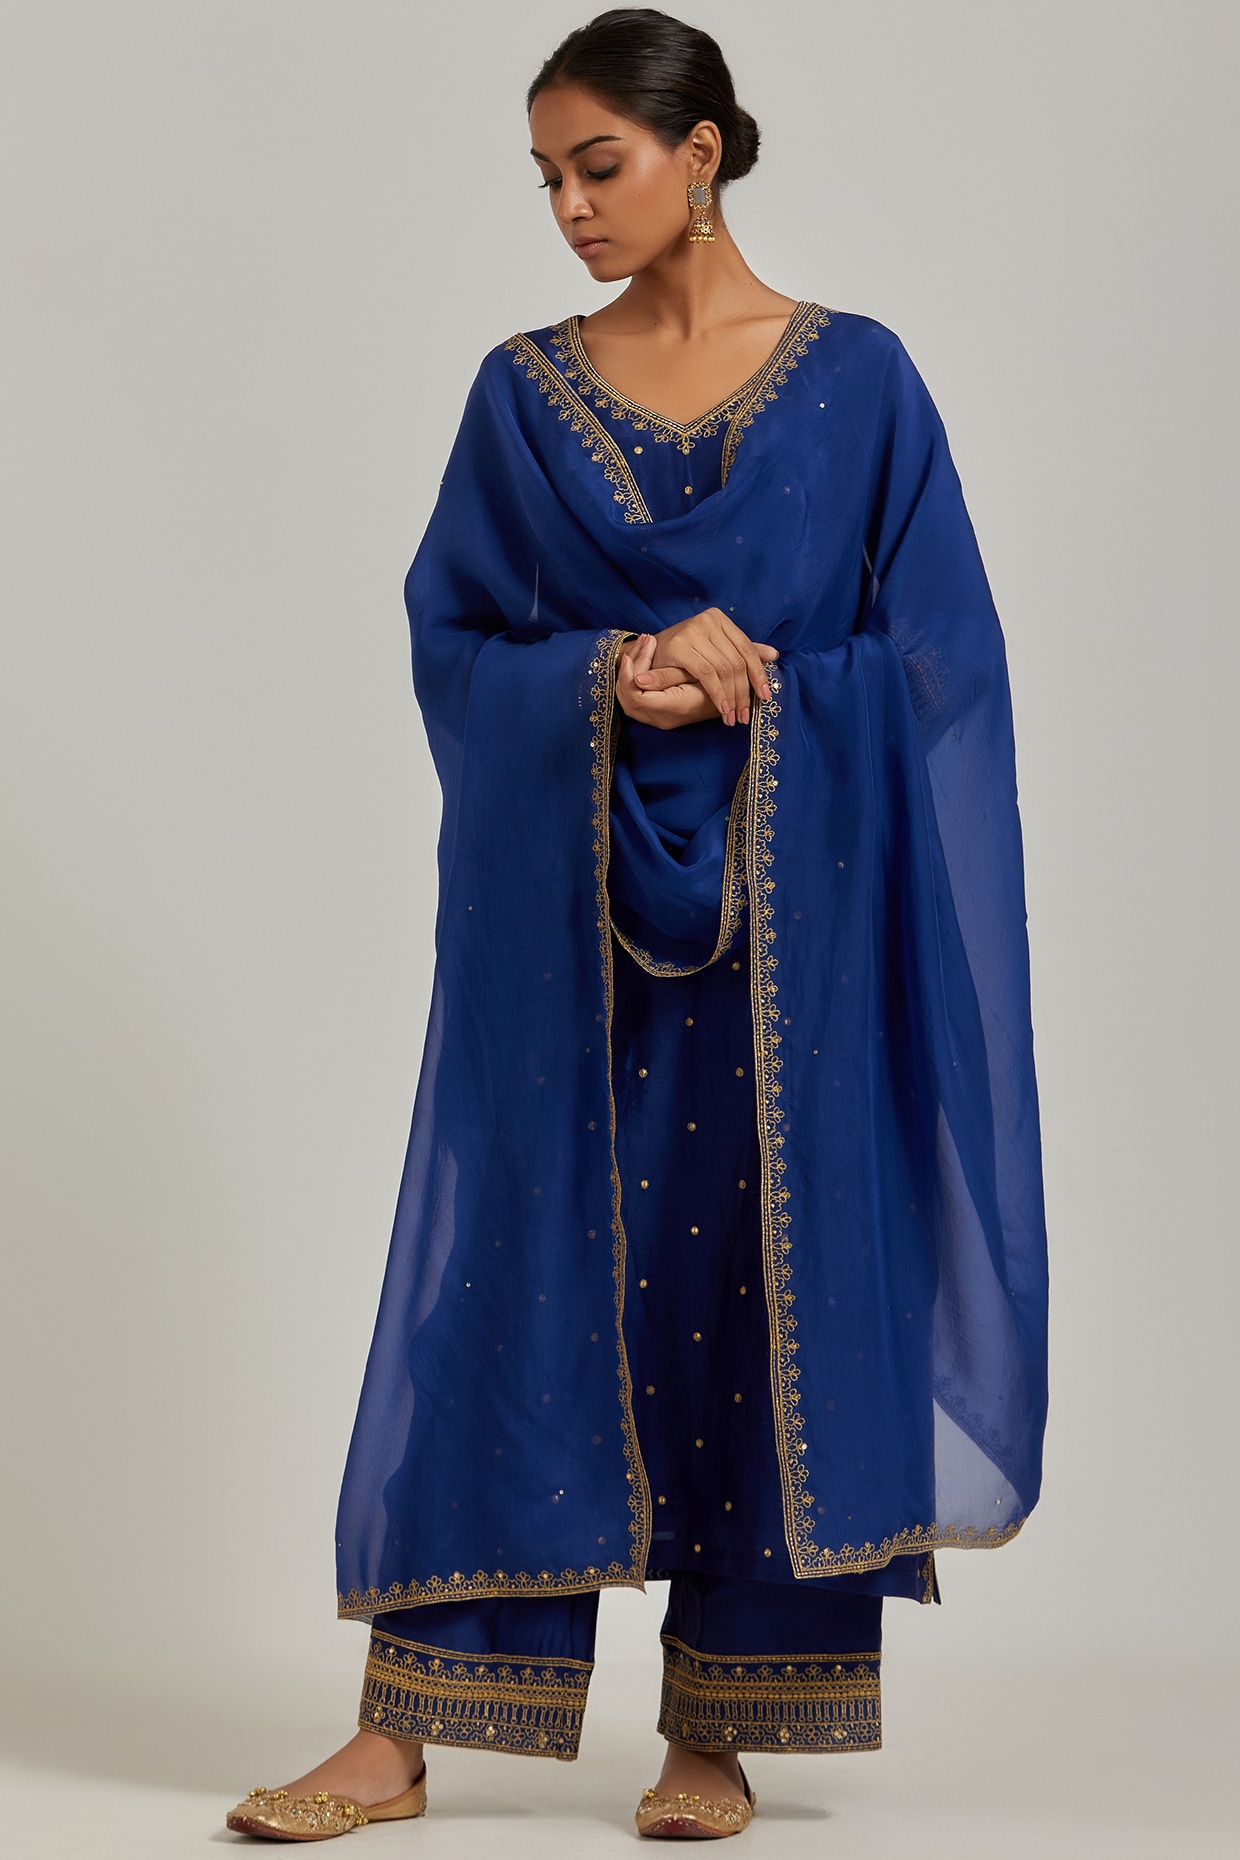 Blue Punjabi Suit for Woman Patiala Salwar Suit Indian Ethnic Outfit  Pakistani Salwar Kameez Desi Clothing Fashion Salwar Kameez Readymade -  Etsy | Indian fashion dresses, Indian designer outfits, Anarkali dress  pattern